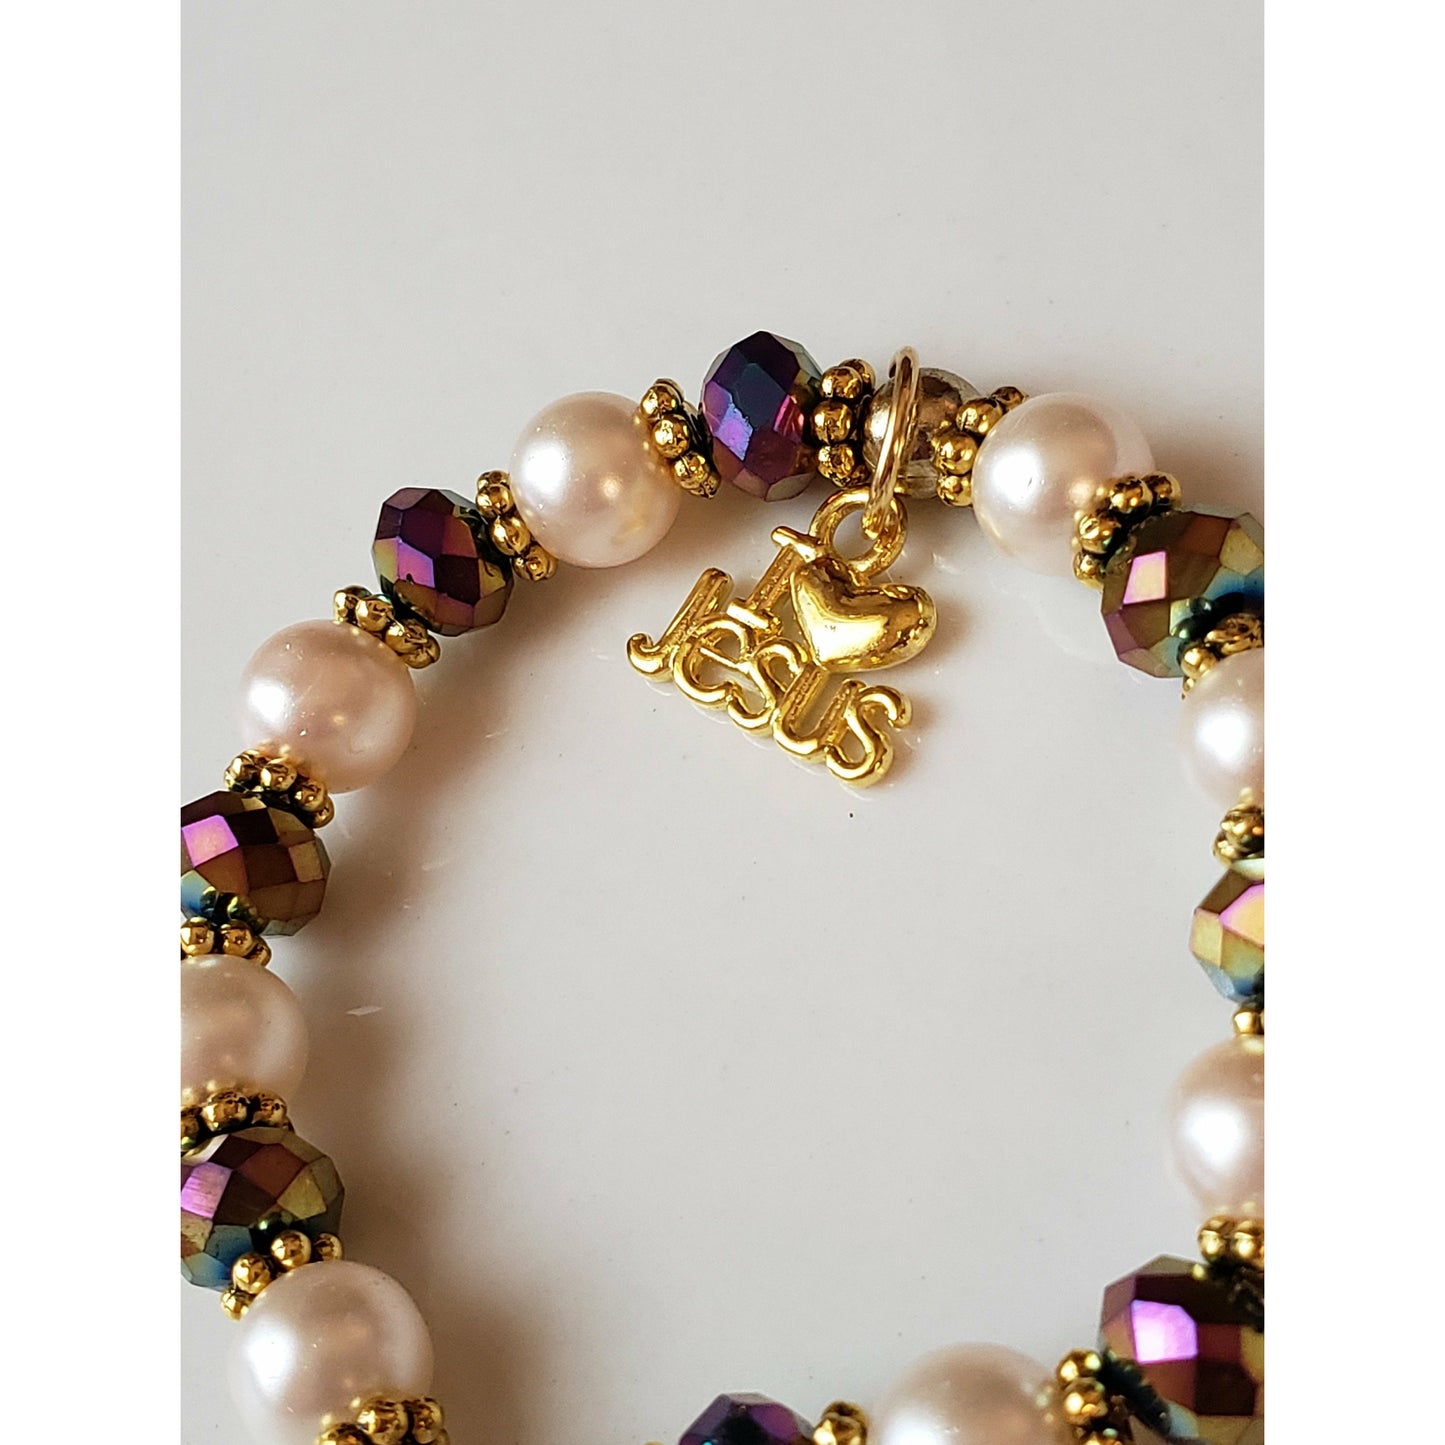 Communion Bracelet Religious jewelry